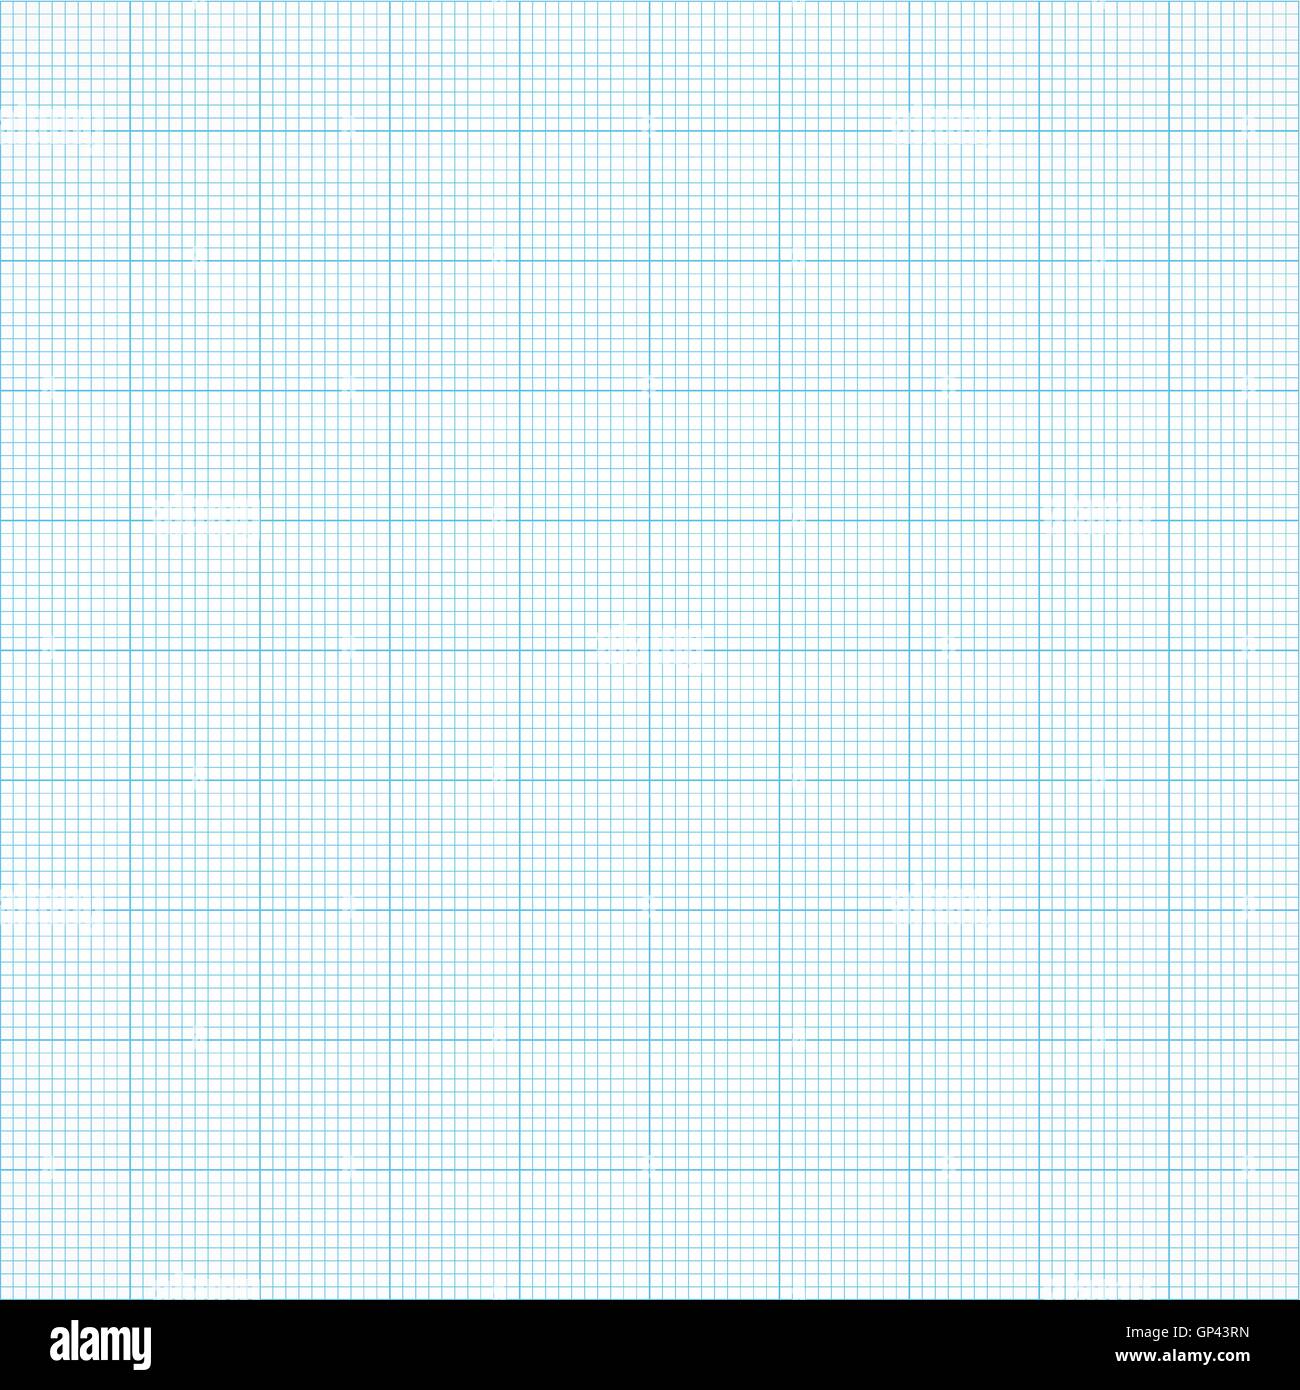 Blueprint backdrop. Measurement grid, engineer sheet and blu